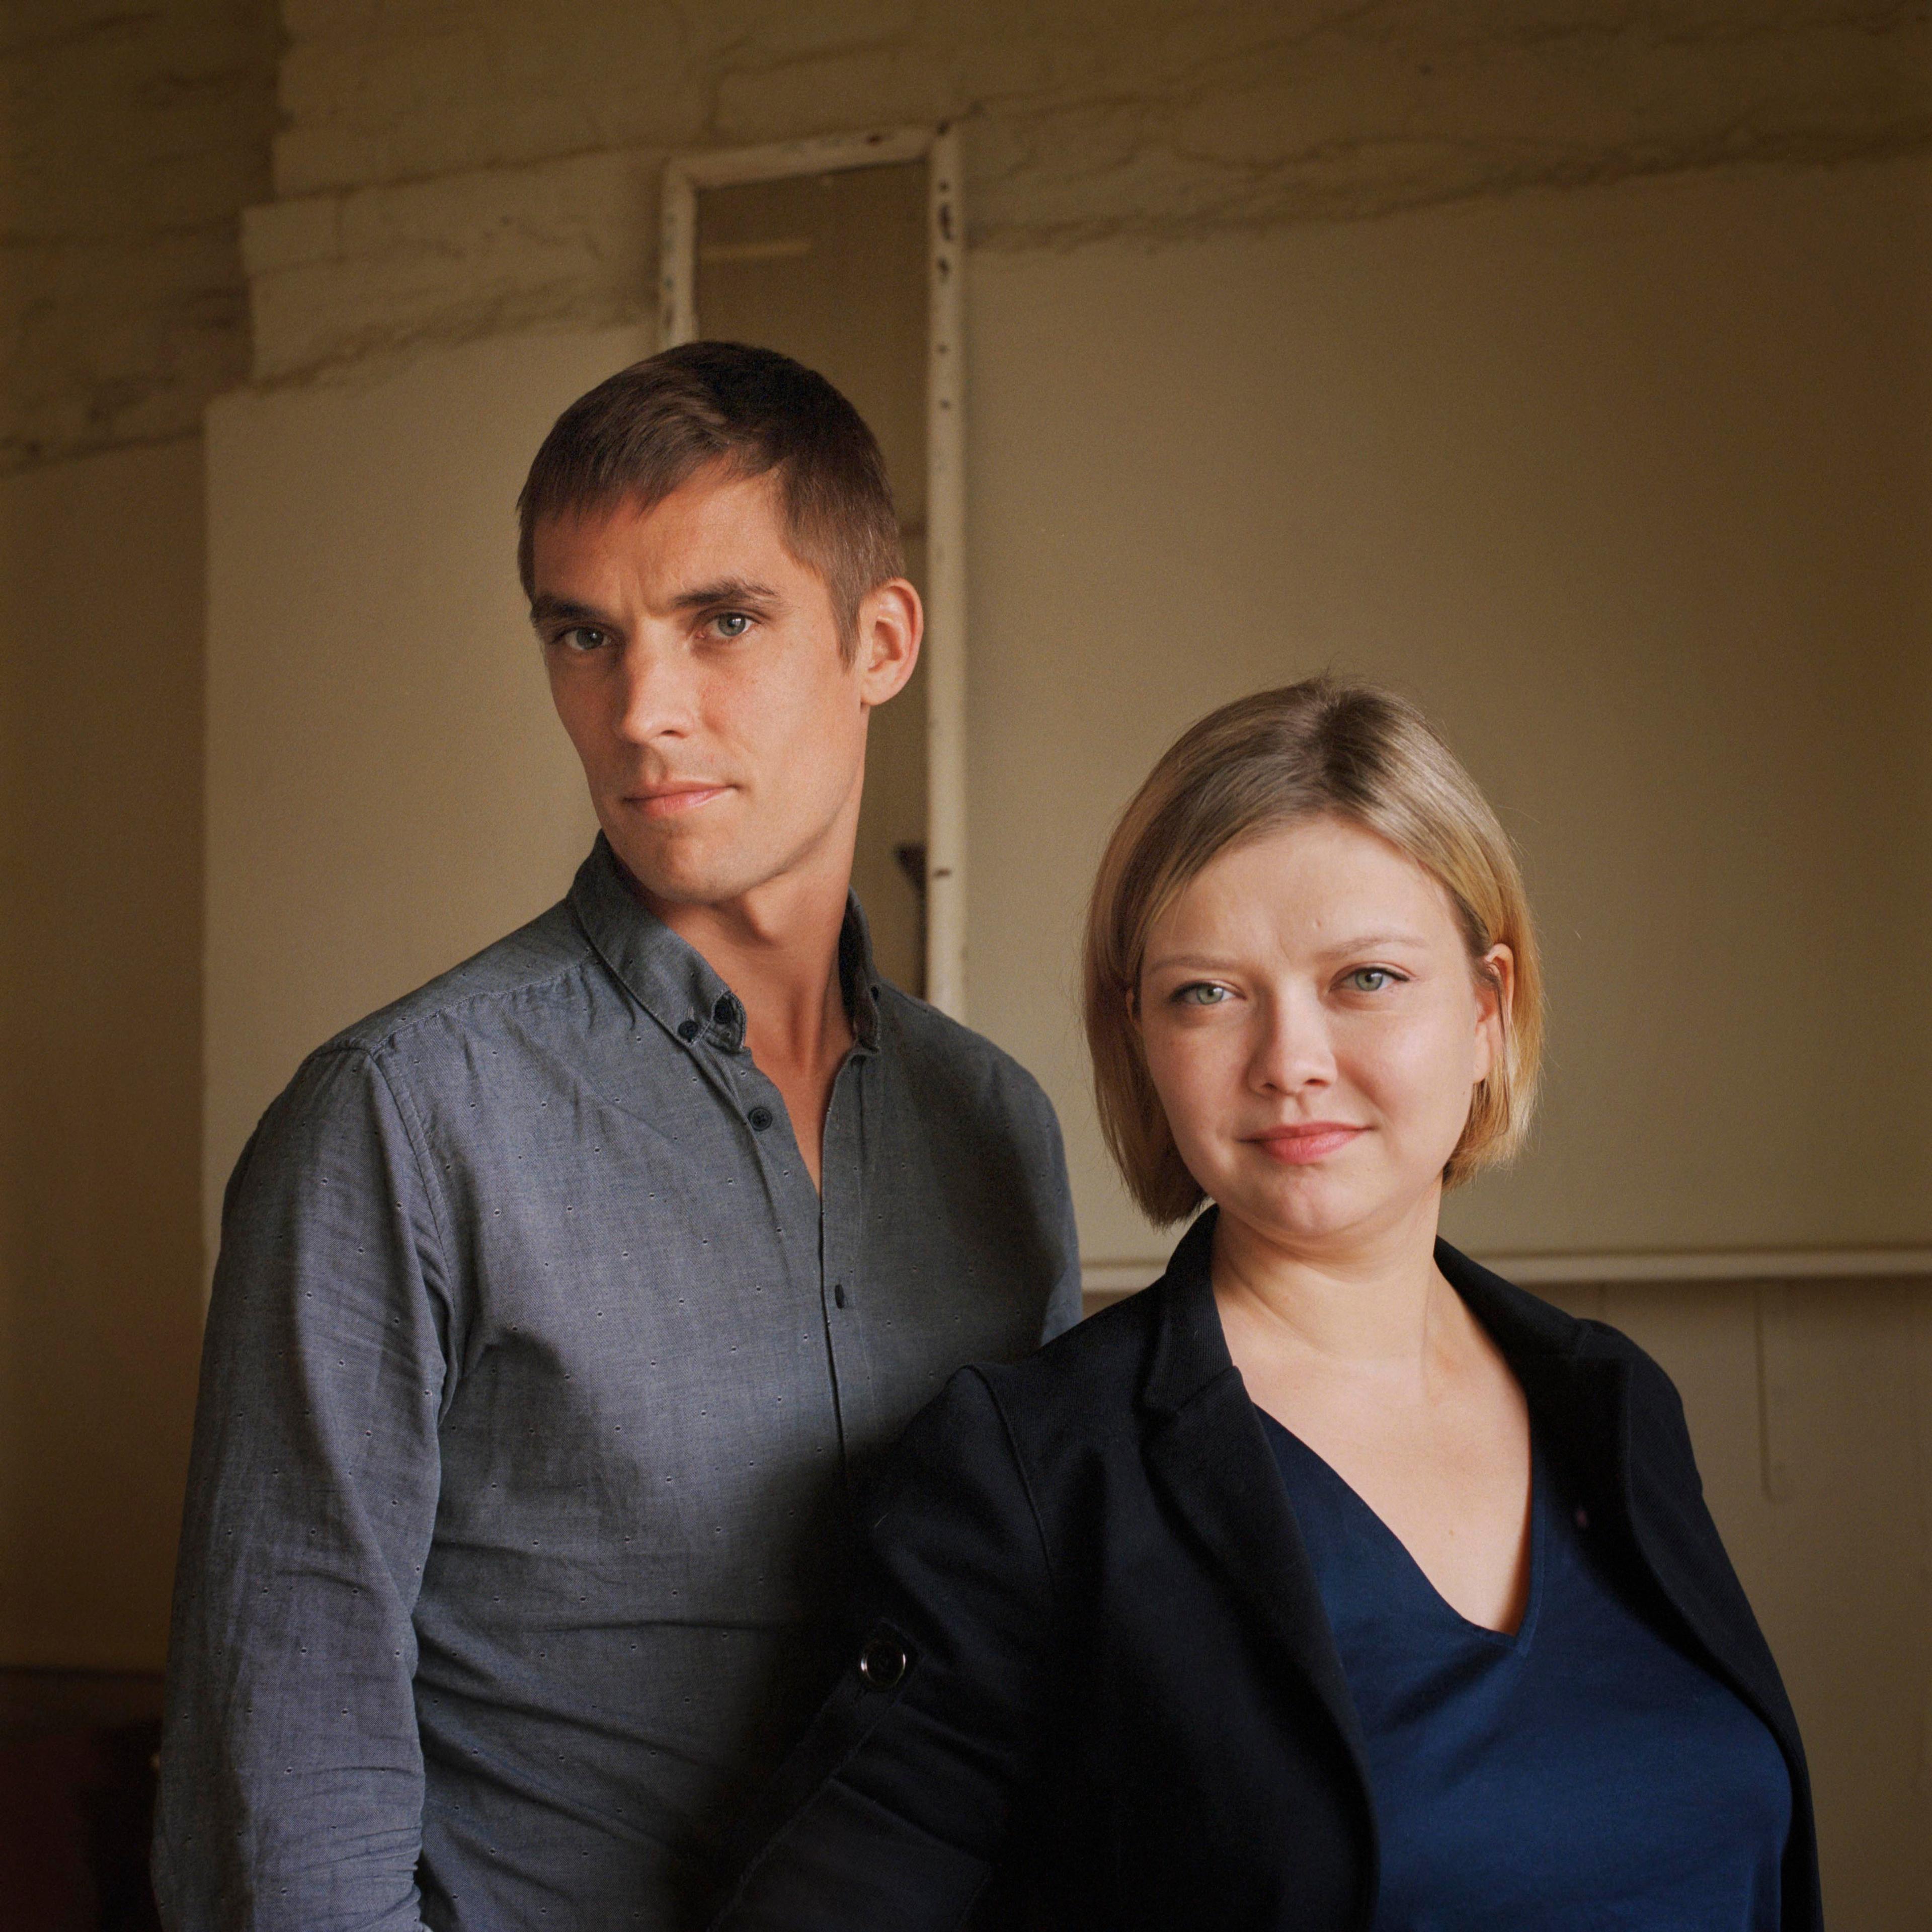 Promotional photograph of Alina Ibragimova and Cédric Tiberghien